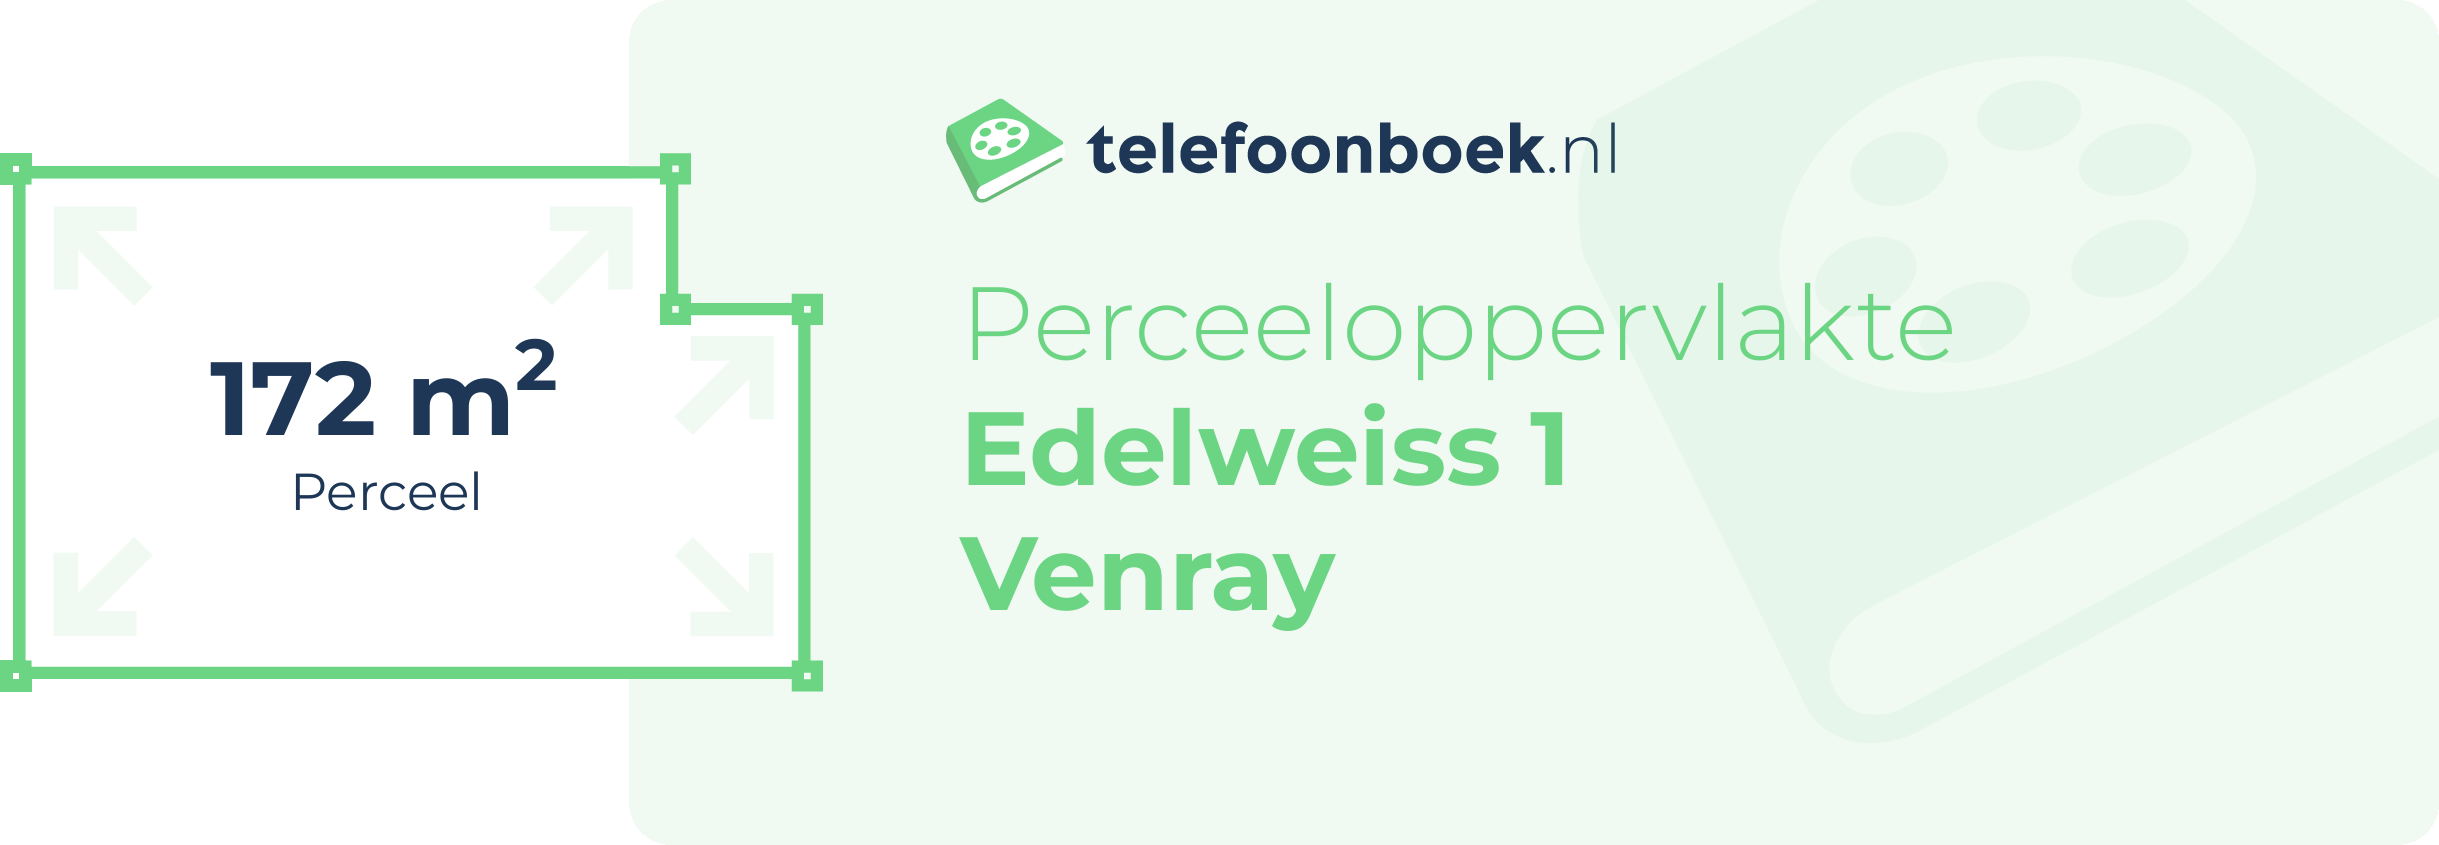 Perceeloppervlakte Edelweiss 1 Venray